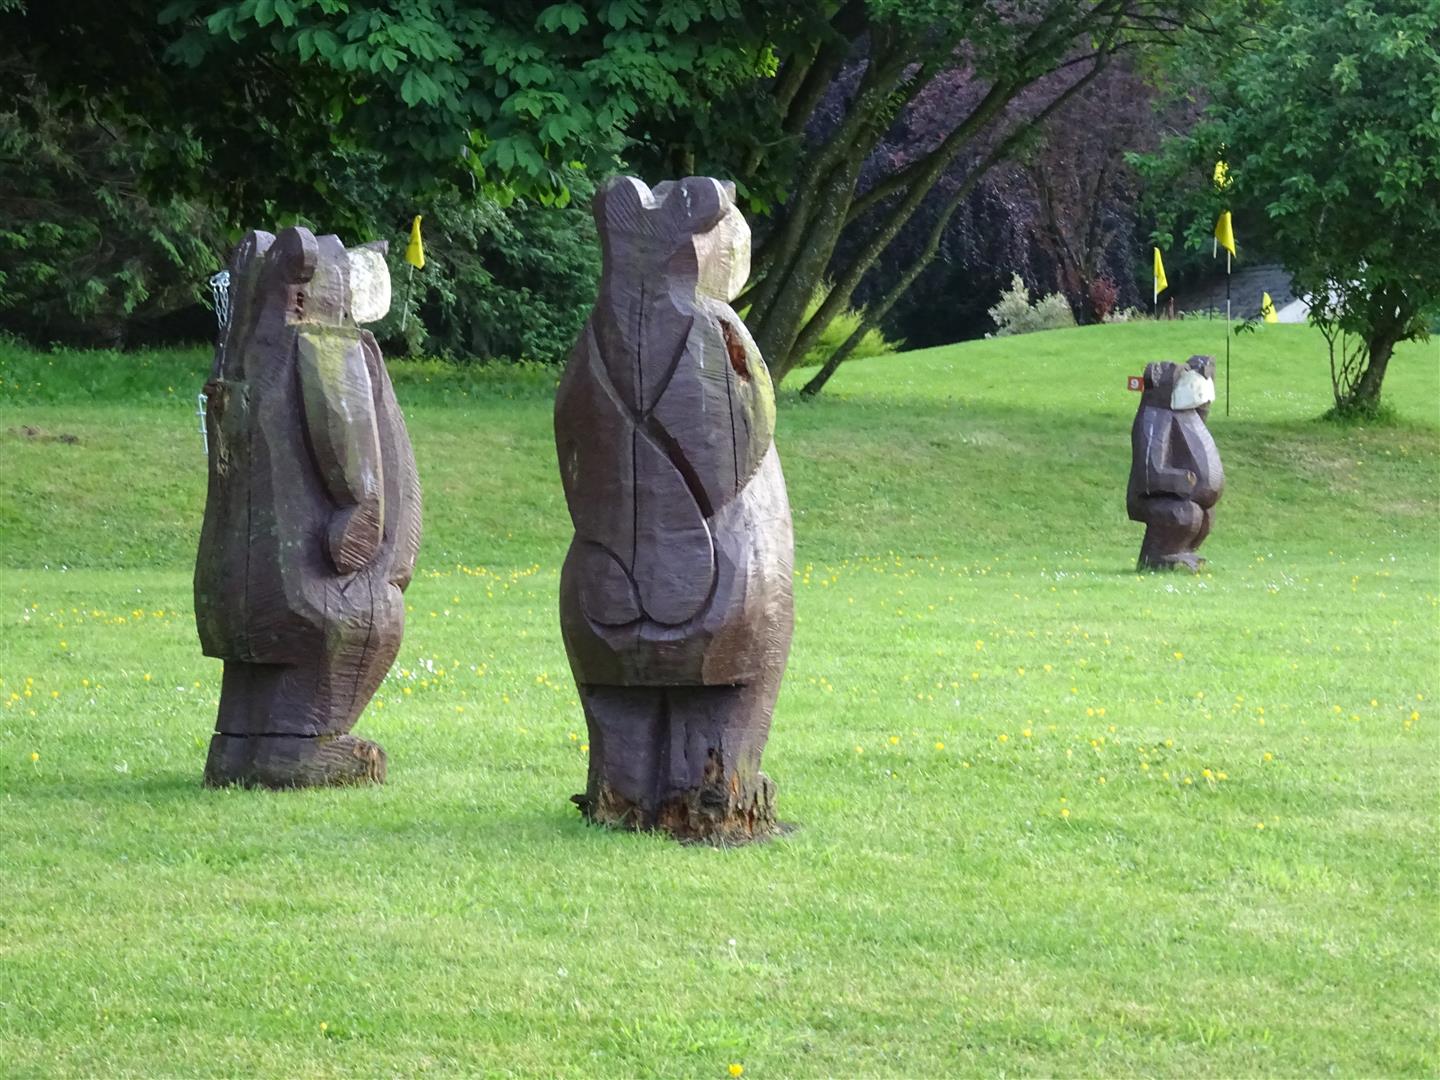 3 bears at Whitbarrow Village